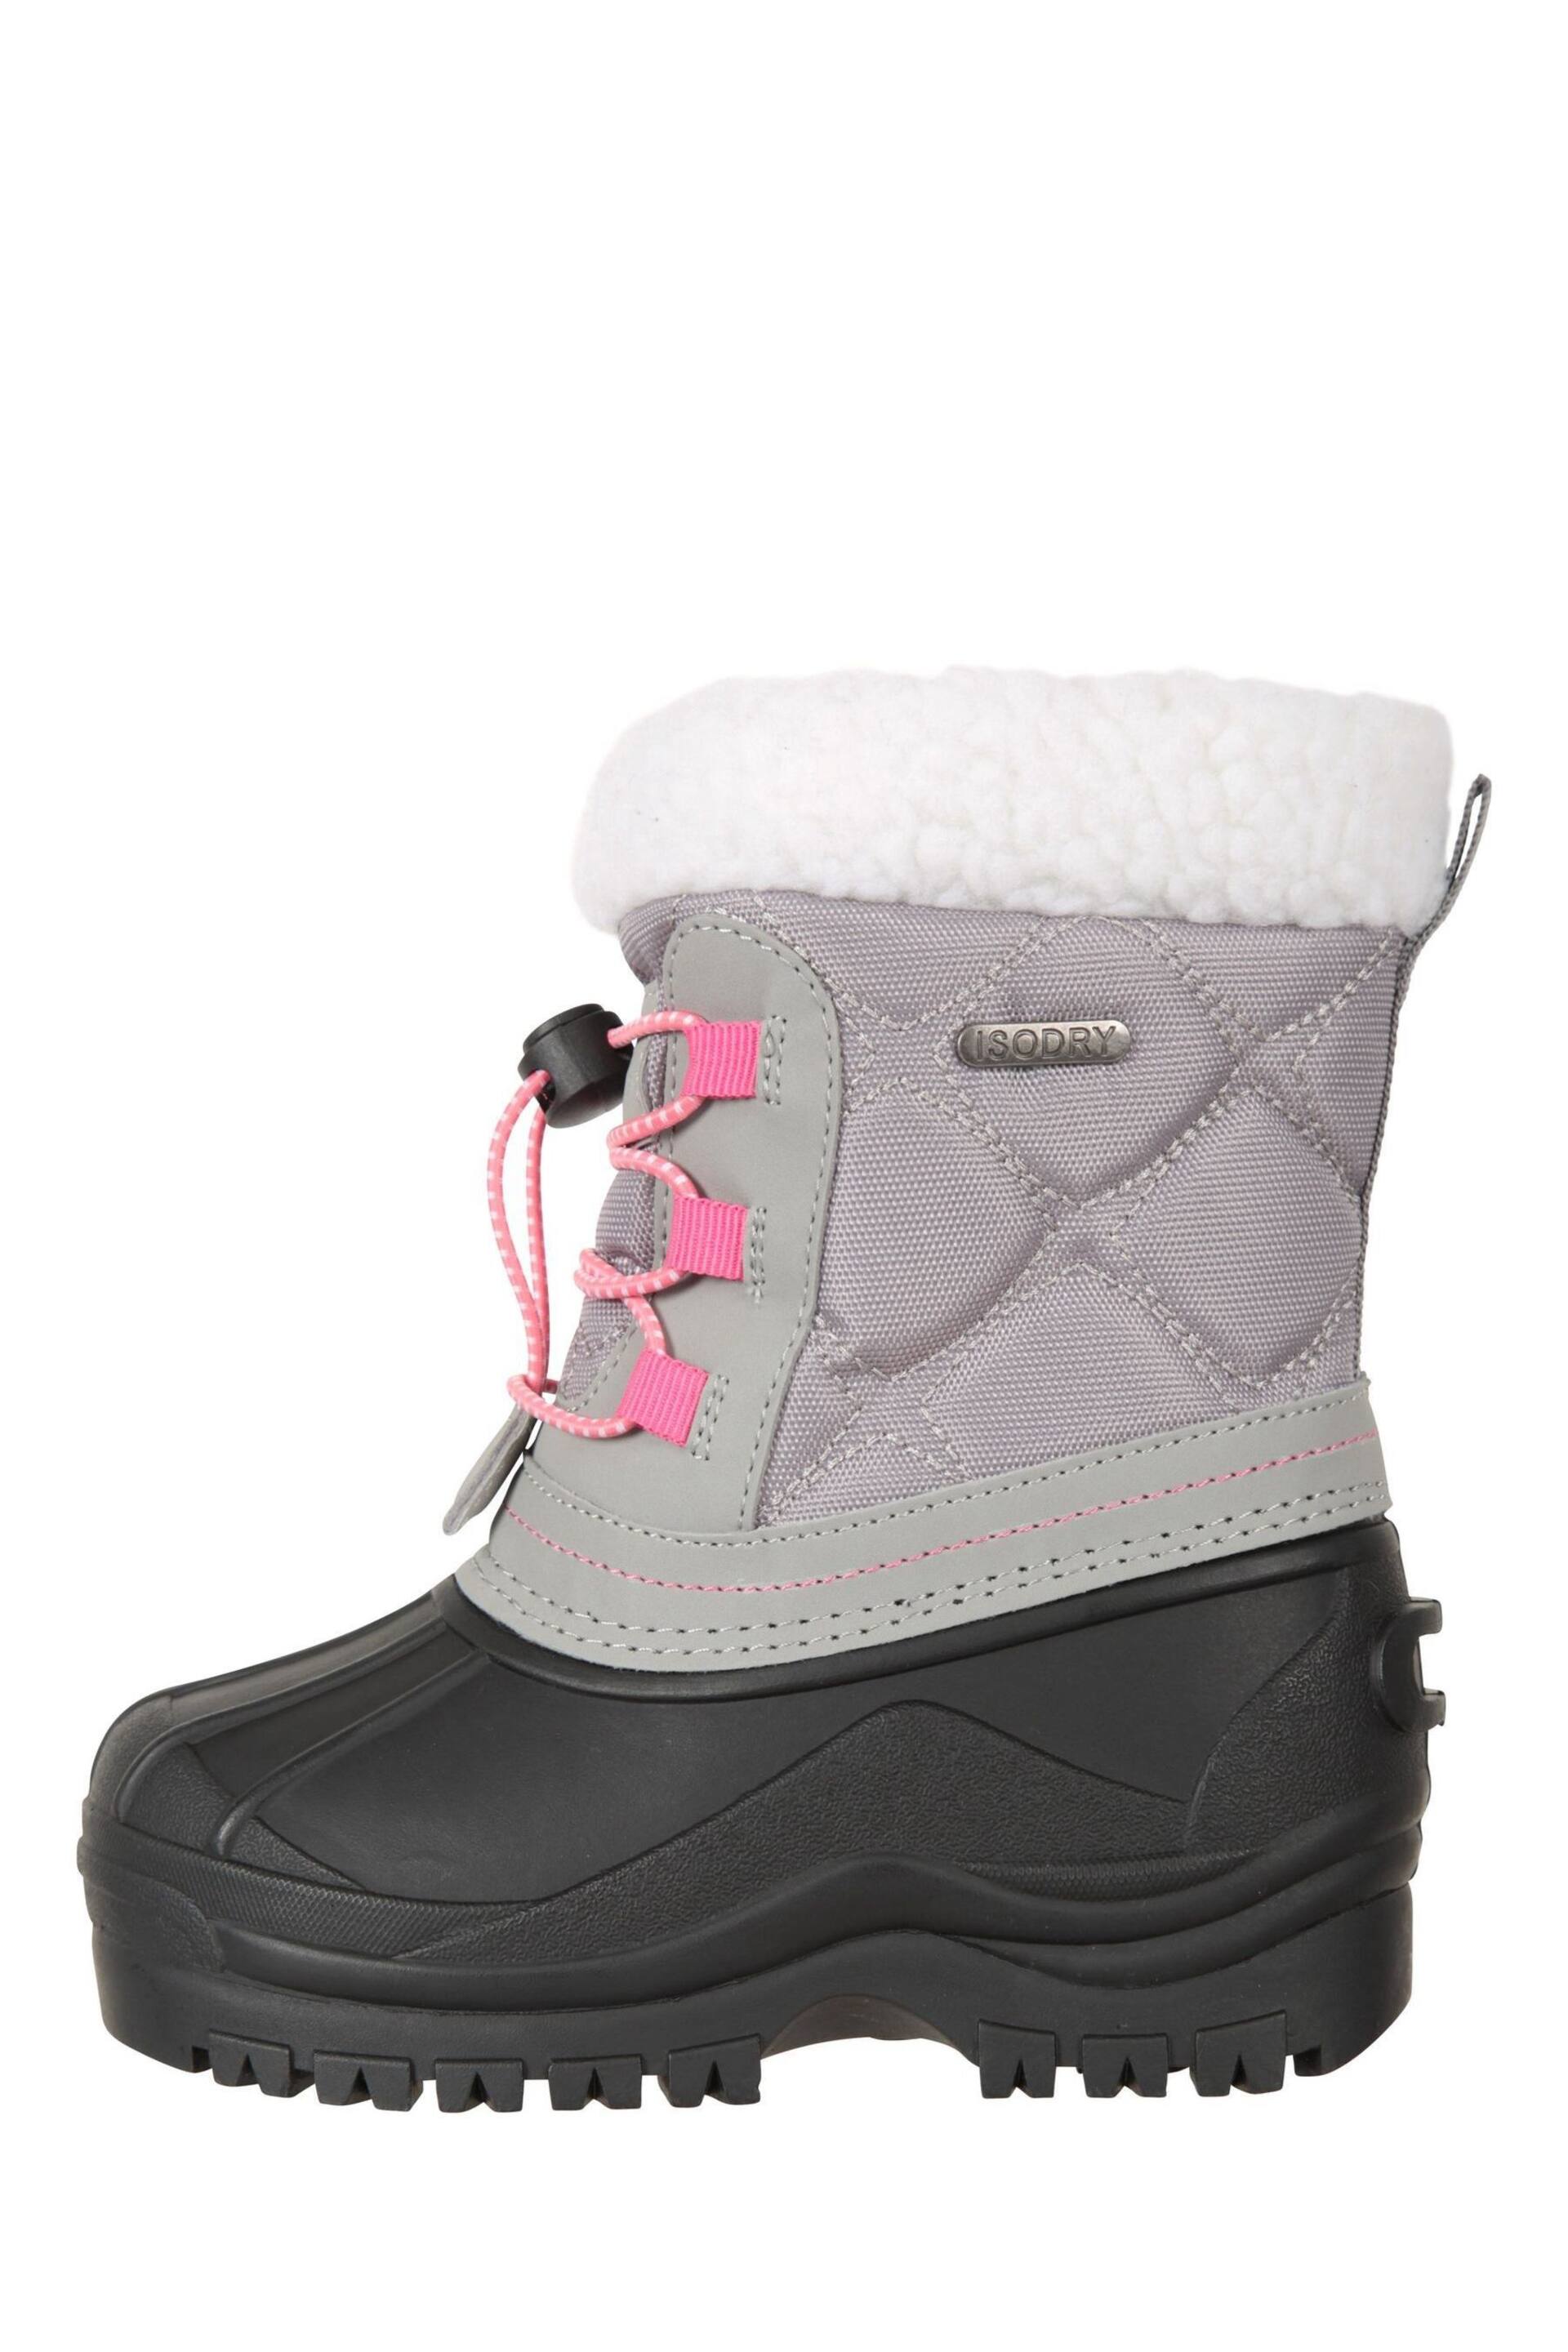 Mountain Warehouse Grey Arctic Junior Waterproof Fleece Lined Snow Boots - Image 3 of 6